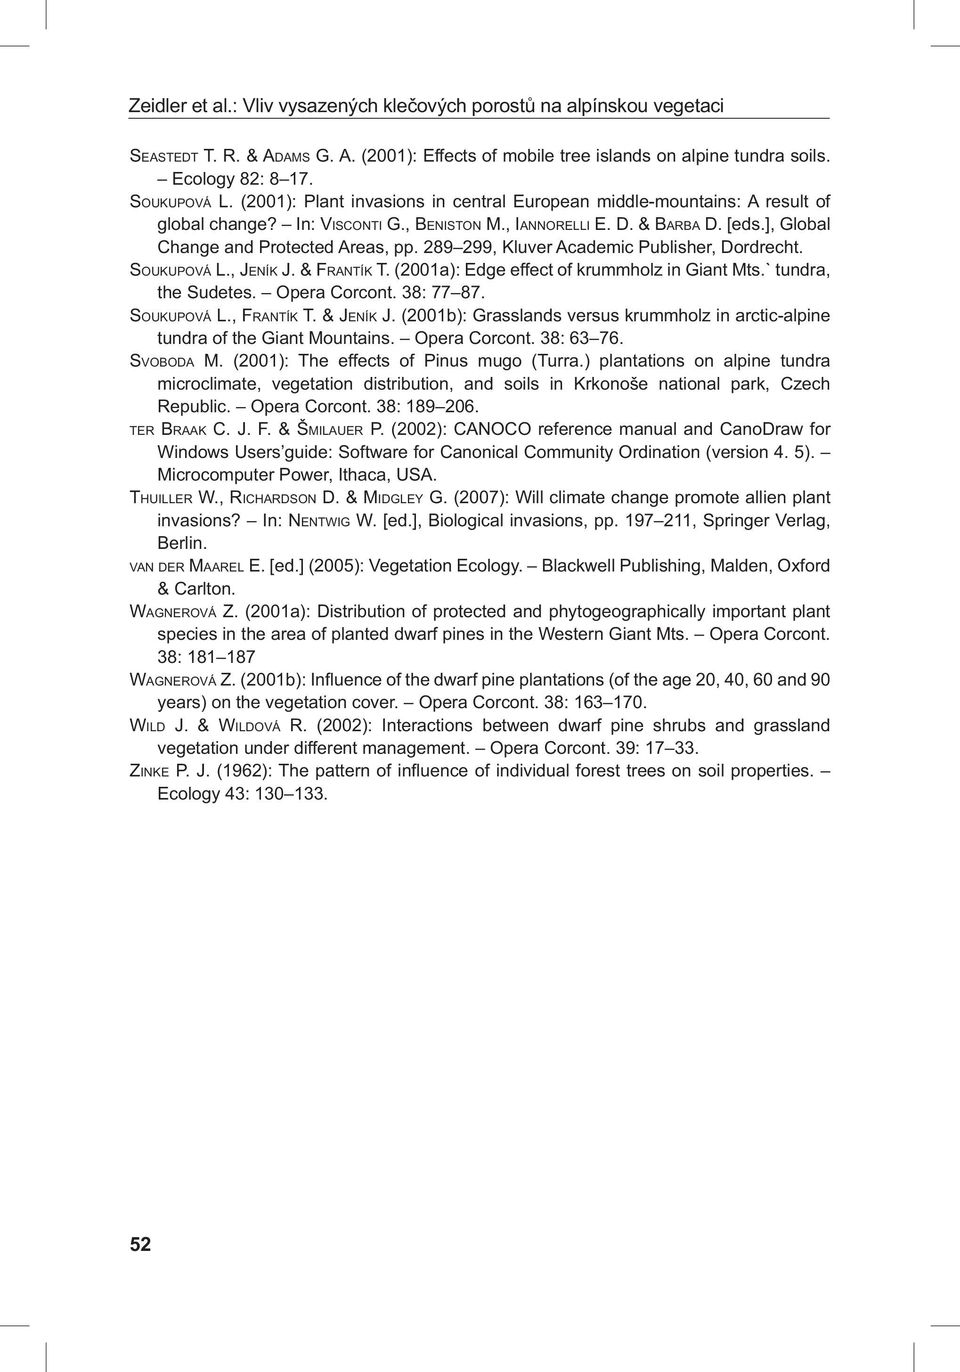 289 299, Kluver Academic Publisher, Dordrecht. SOUKUPOVÁ L., JENÍK J. & FRANTÍK T. (2001a): Edge effect of krummholz in Giant Mts.` tundra, the Sudetes. Opera Corcont. 38: 77 87. SOUKUPOVÁ L., FRANTÍK T.